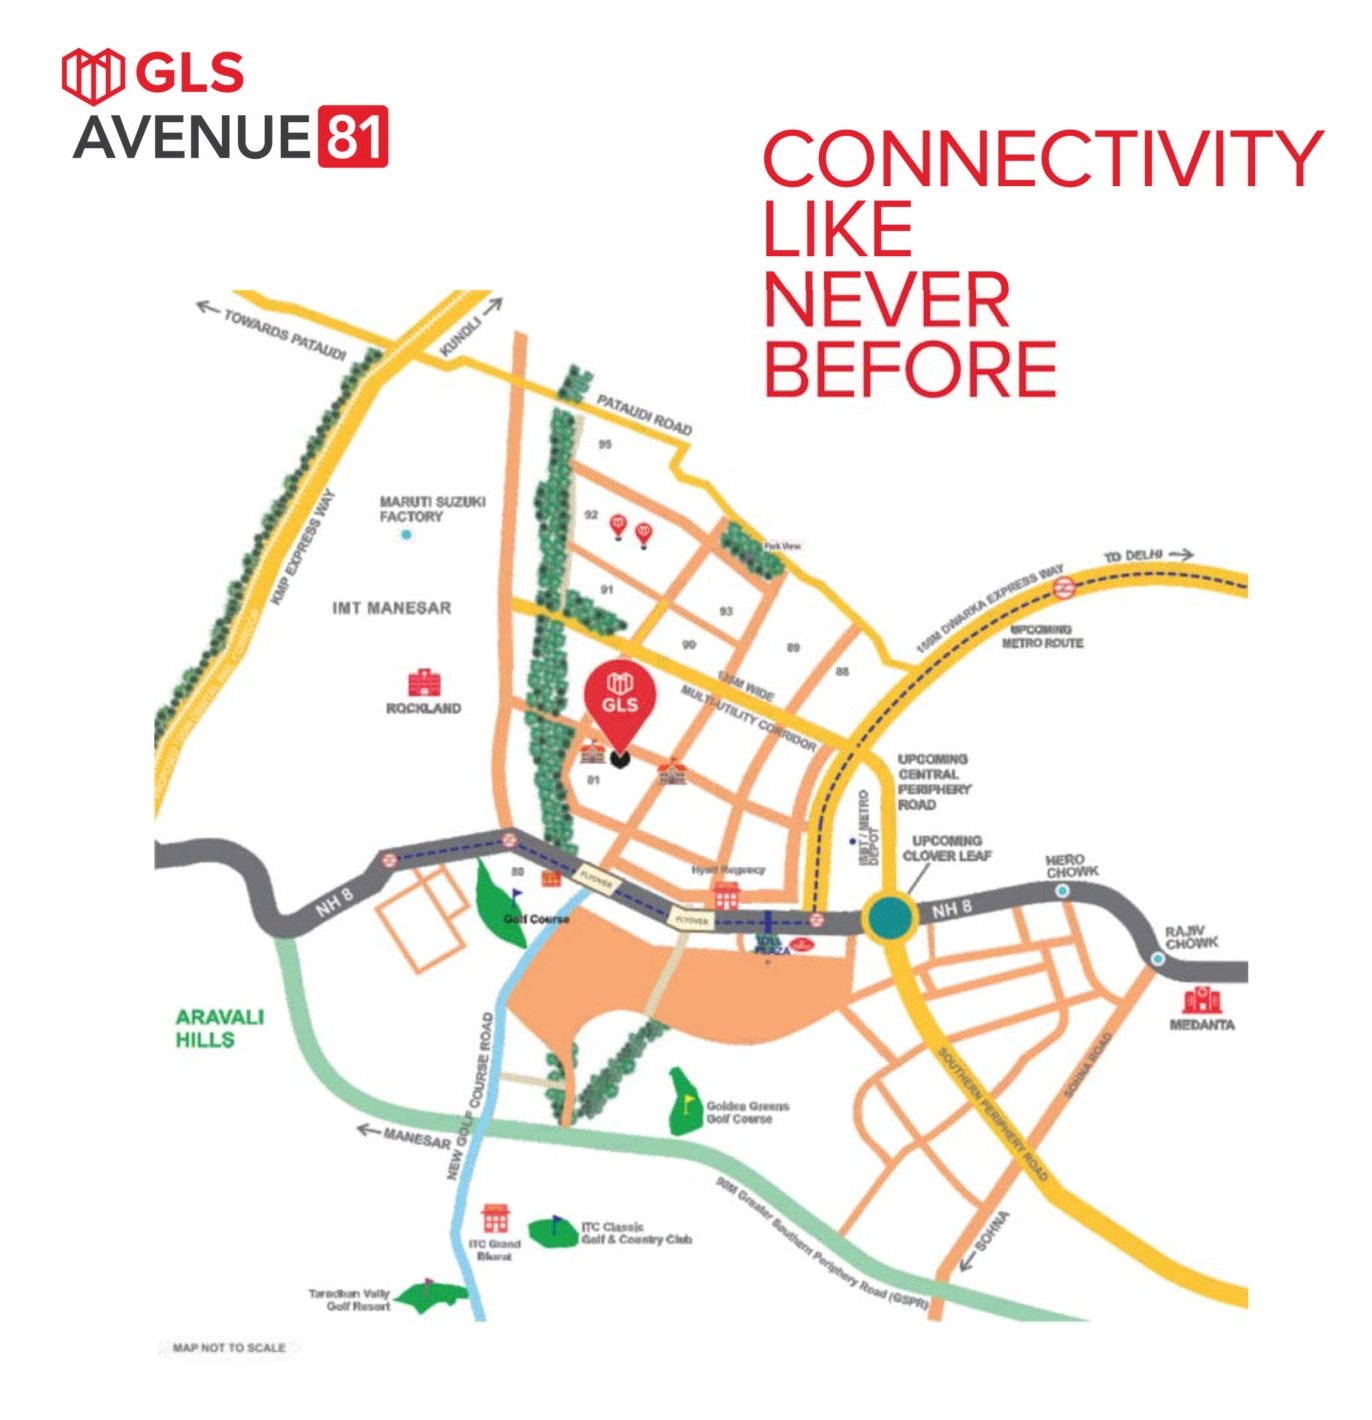 GLS-Avenue-81-location-Map